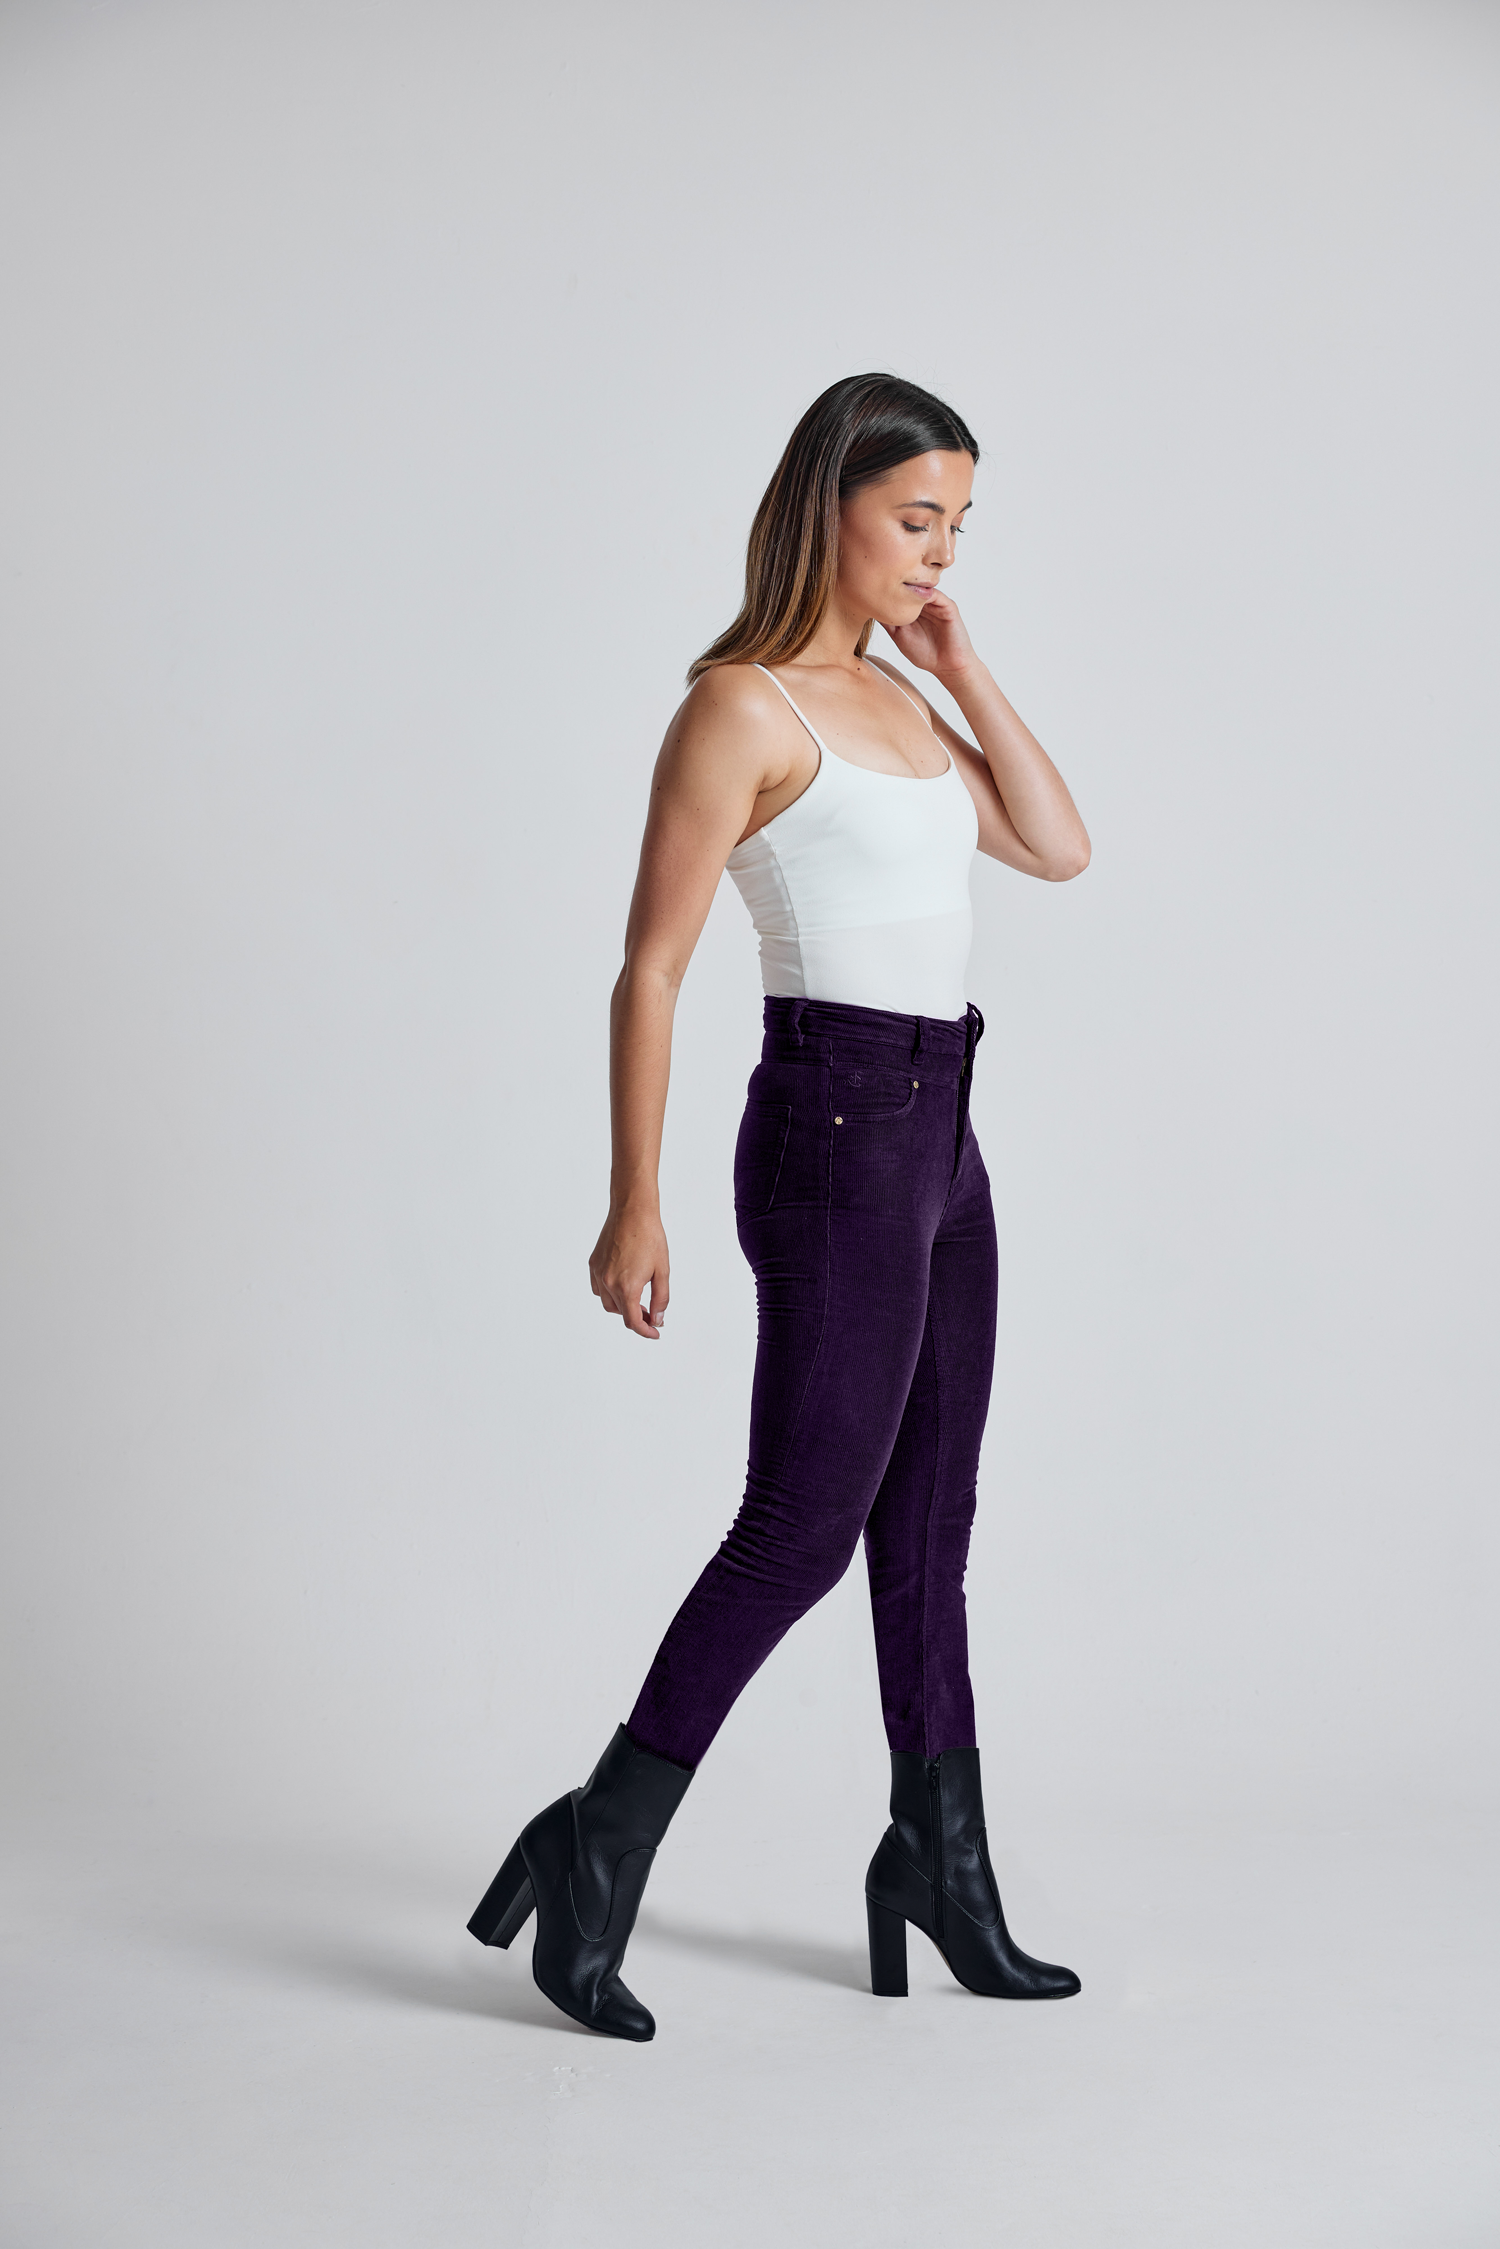 NINA Aubergine - GOTS Organic Cotton Cord High Waist Skinny Jean by Flax & Loo, 26" / Regular